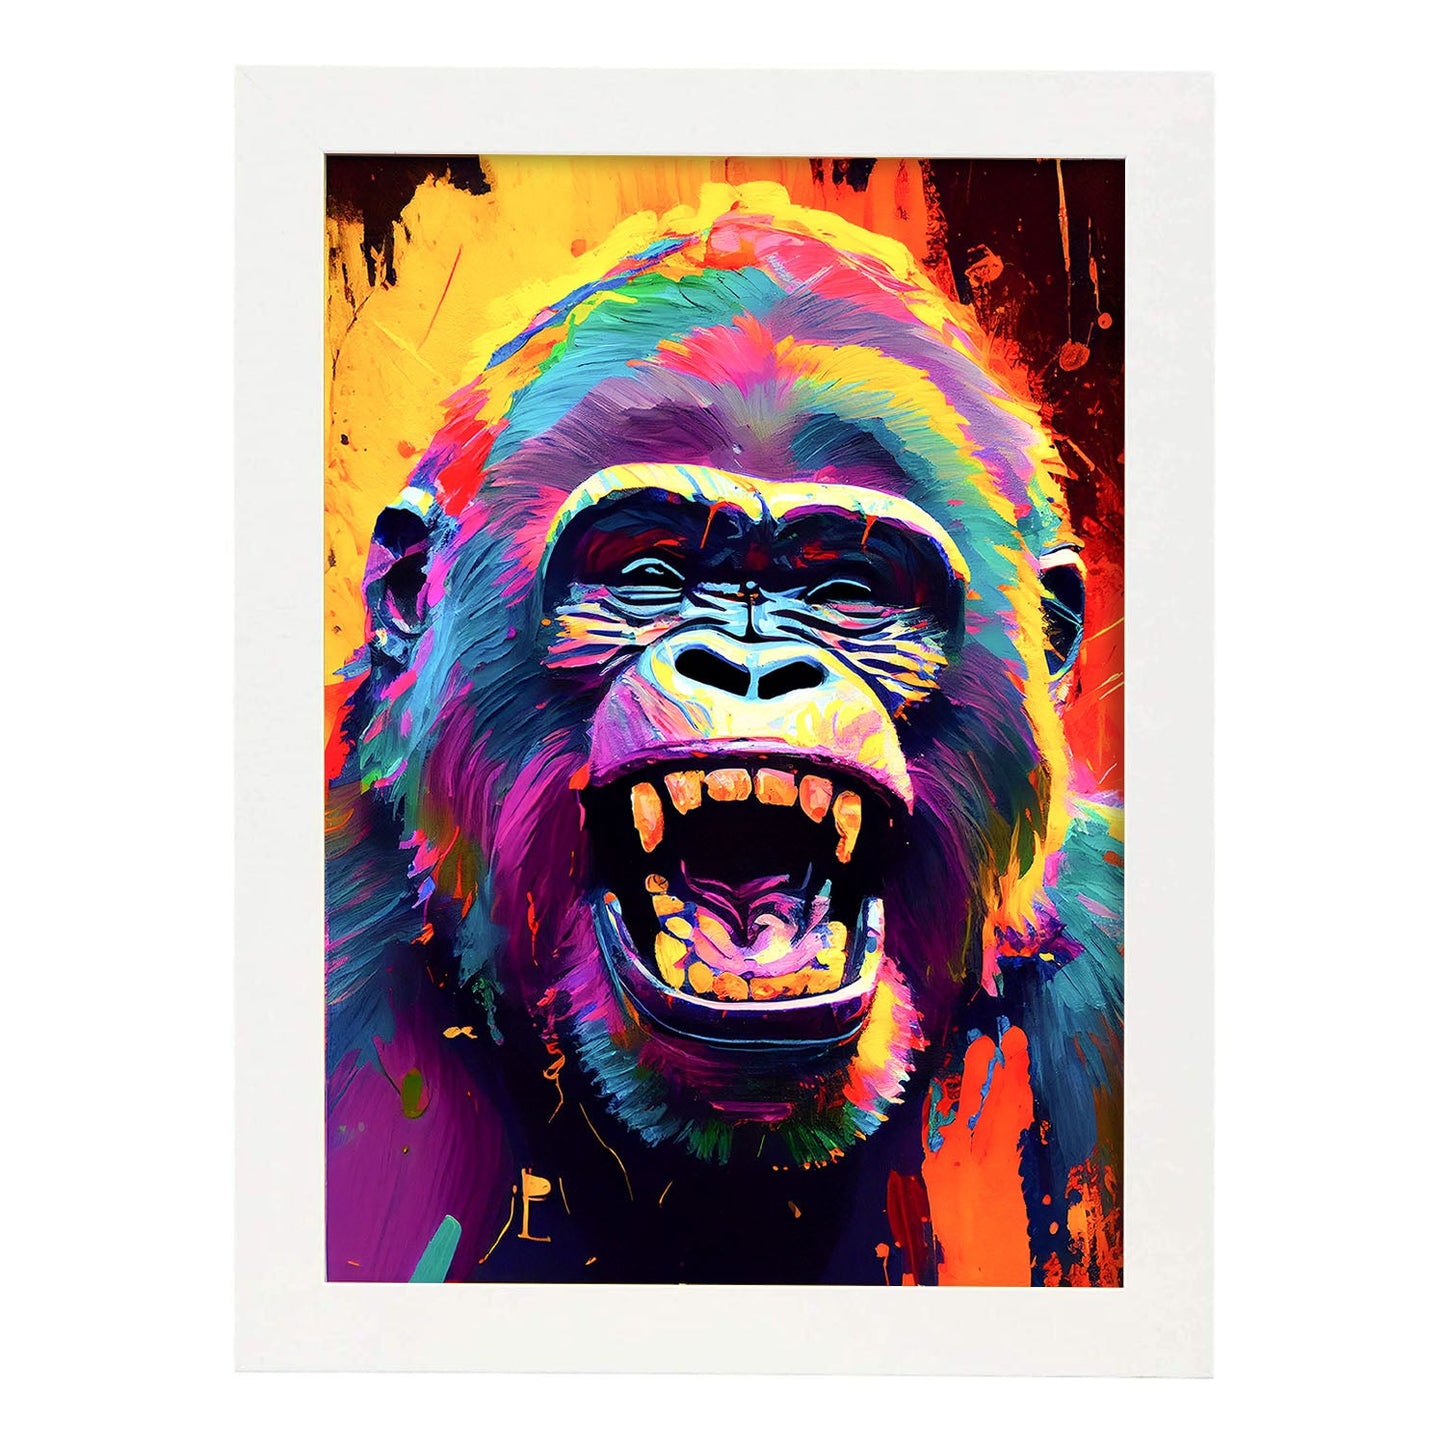 Lámina de Gorila Sonriente Abstracto en Estilo Lisa Fran de Nacnic